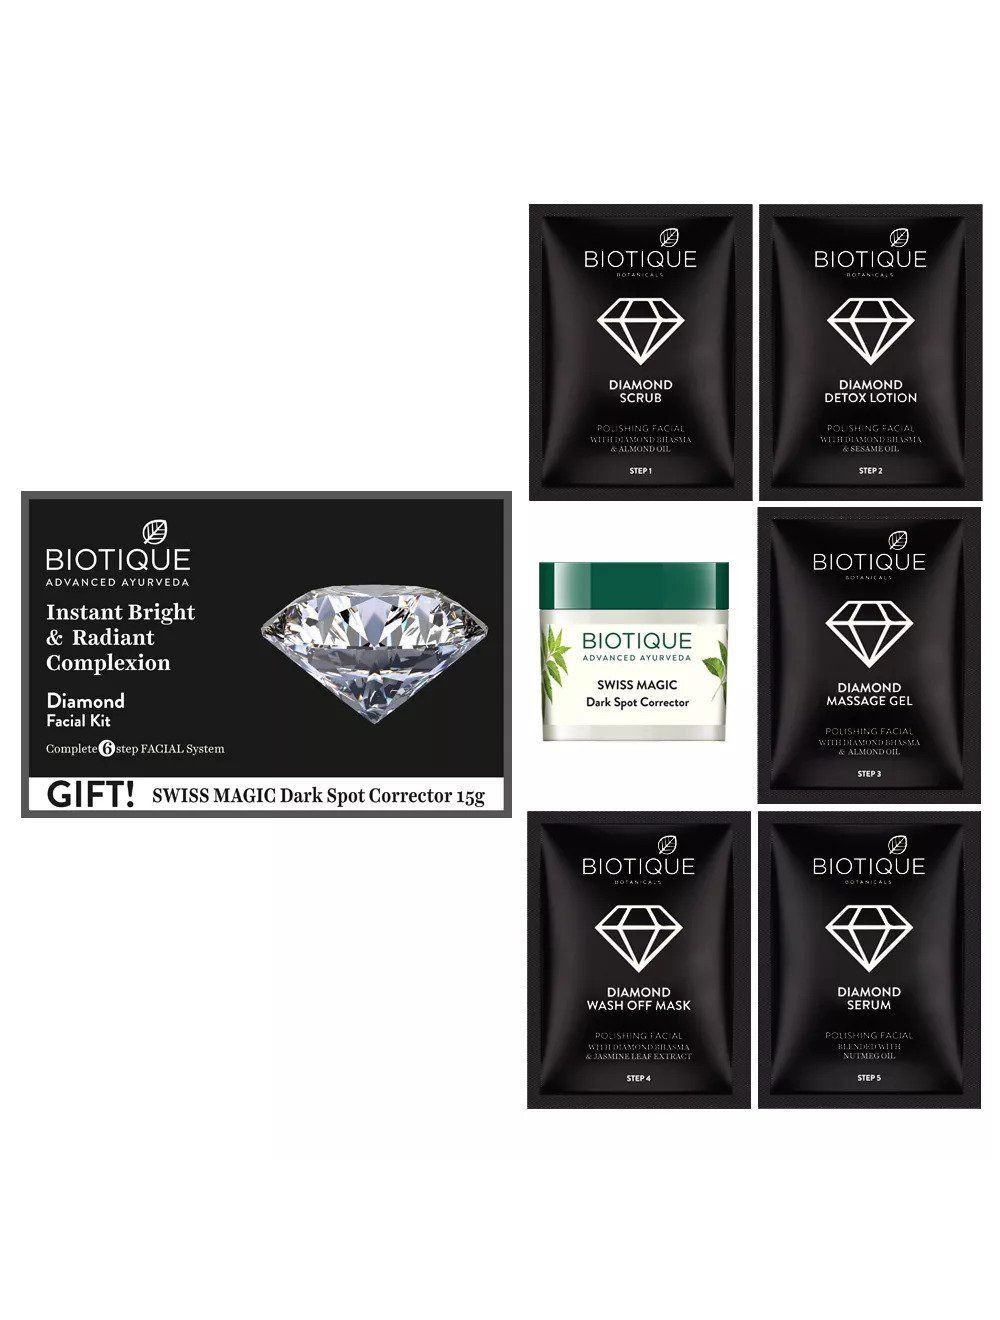 Biotique Bio Diamond Facial Kit (65gm) - Niram